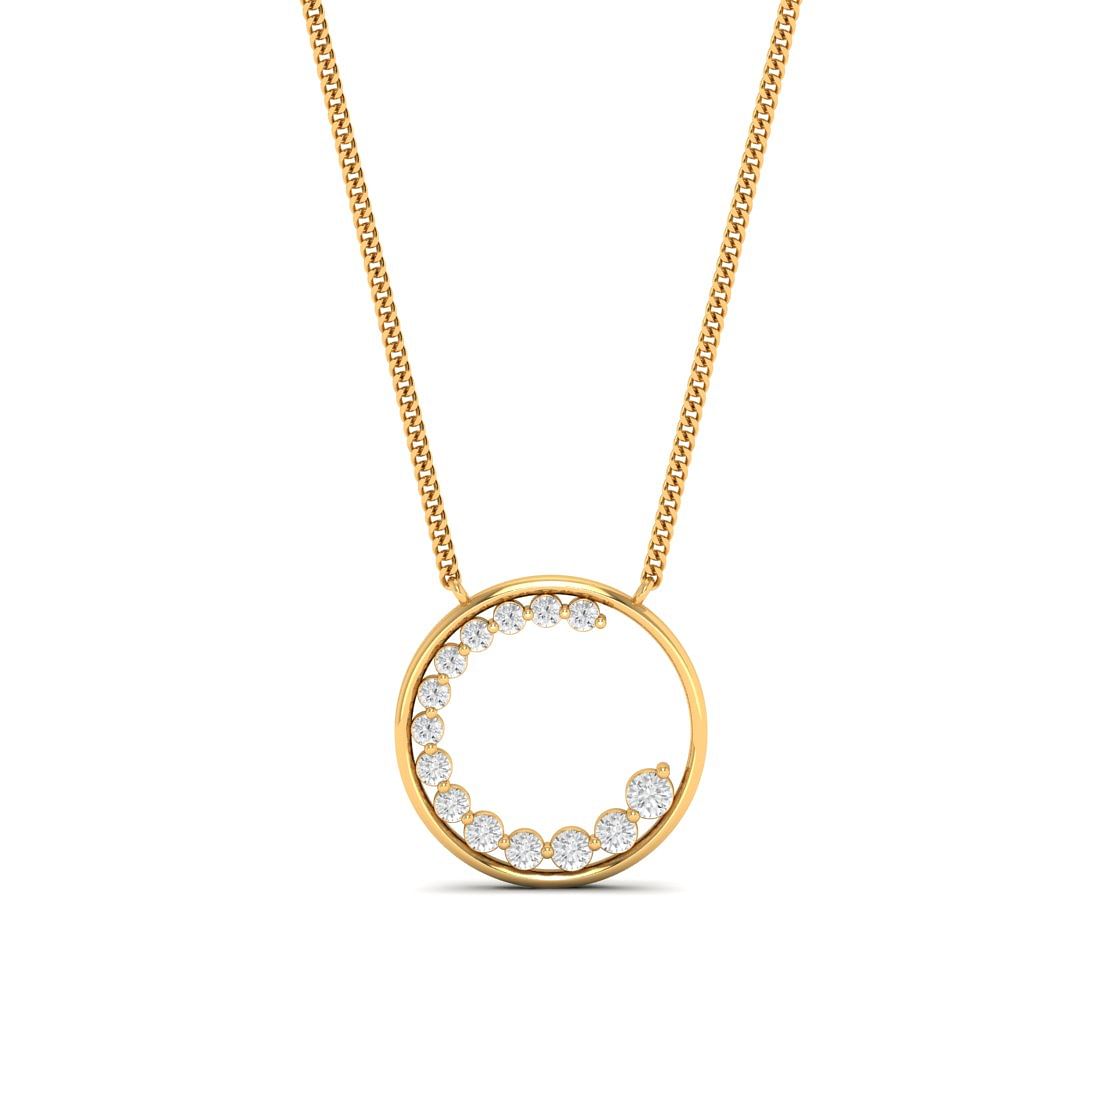 Round Design Yellow Gold Diamond Pendant For Women